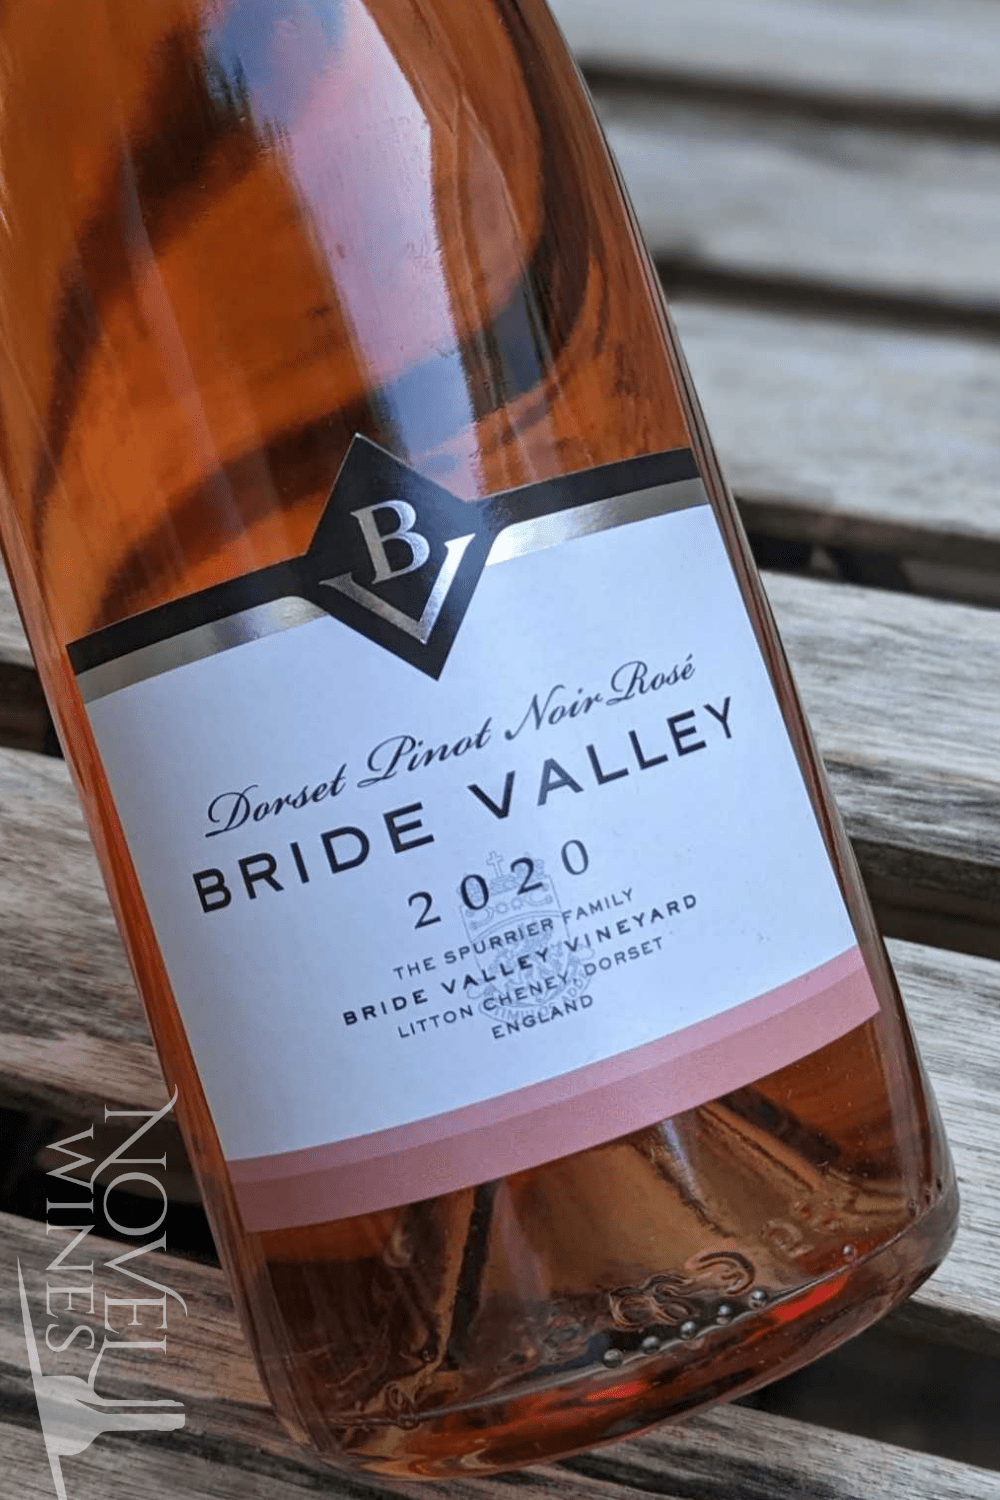 Bride Valley Vineyard Rose Wine Bride Valley Vineyard Dorset Pinot Noir Rosé 2019, England